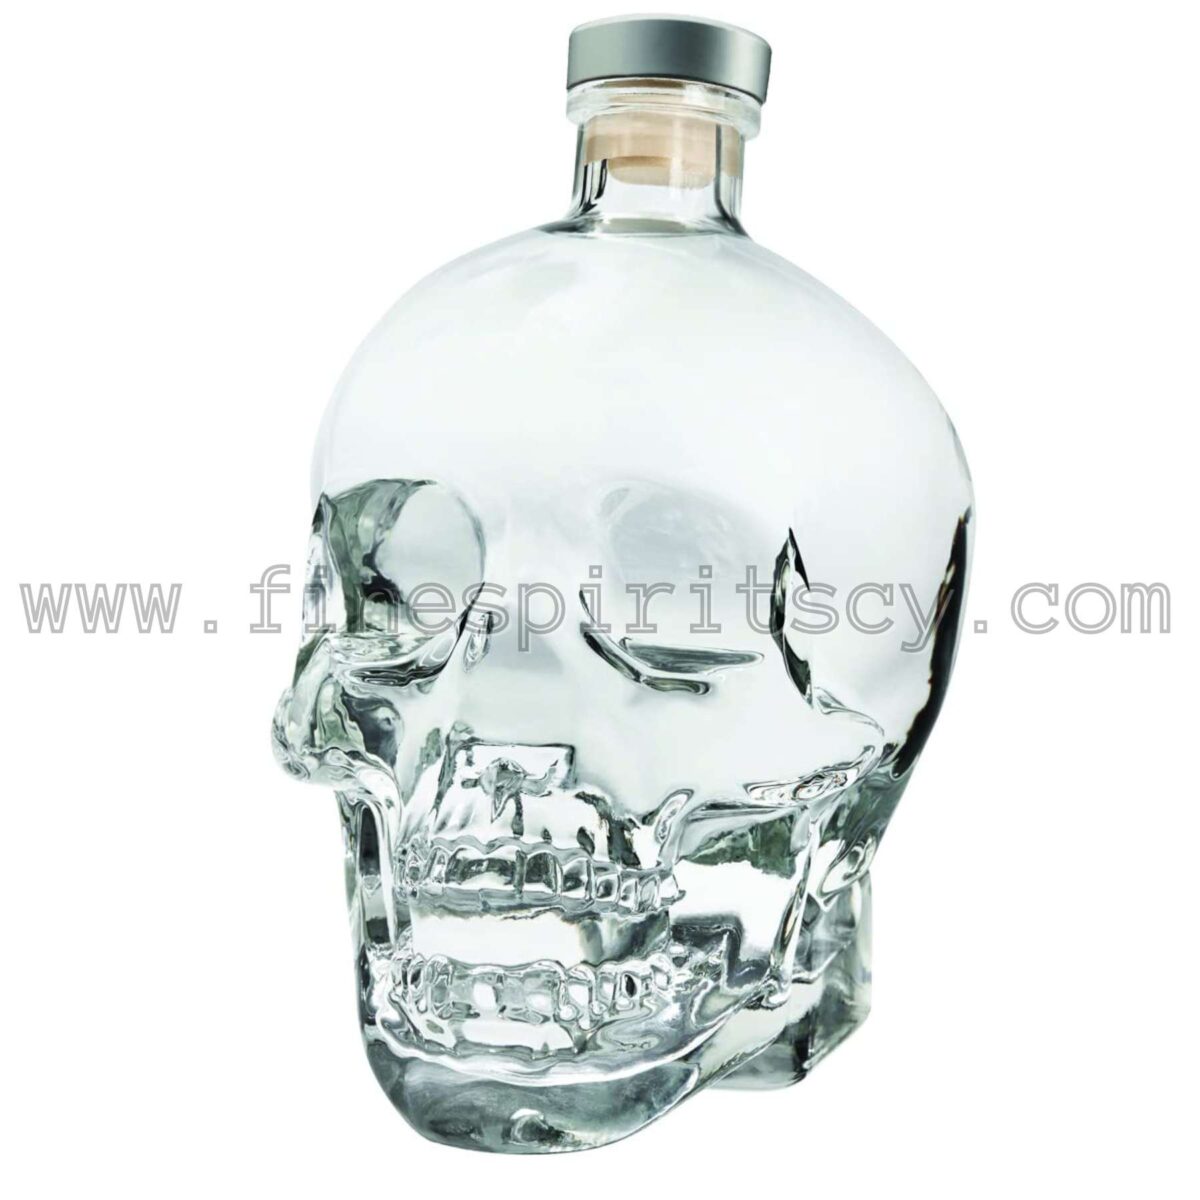 Crystal Head Original Vodka 1750ml 175cl 1.75L Travel Retail Exclusive Price Cyprus Magnum